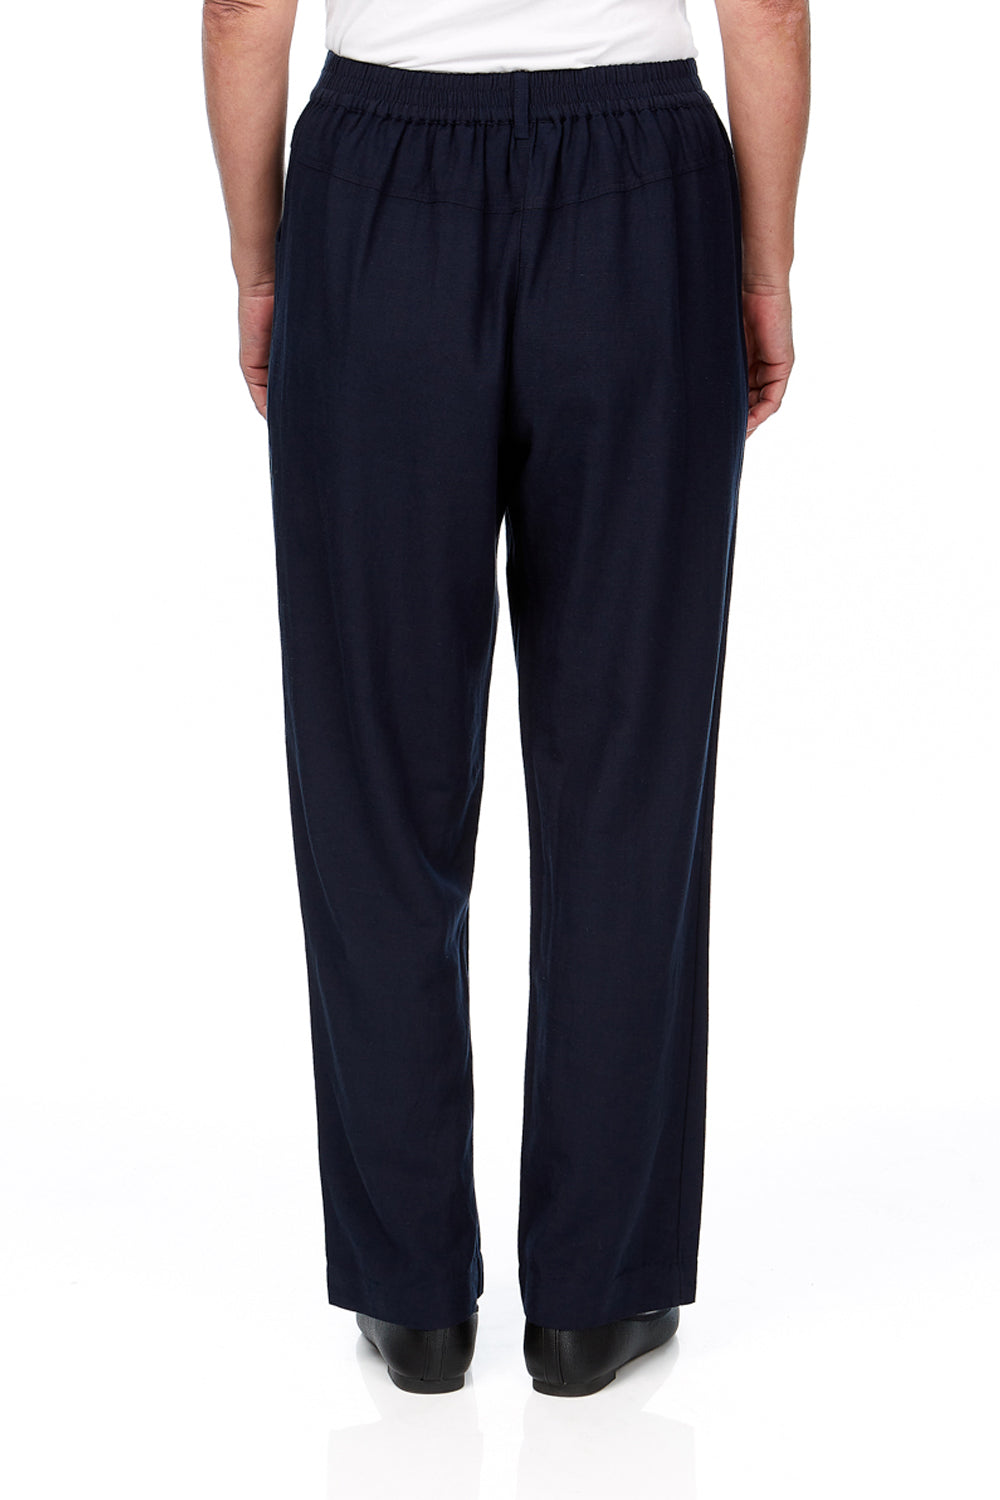 Tigiwear Linen Blend Navy Trousers 3 Shaws Department Stores